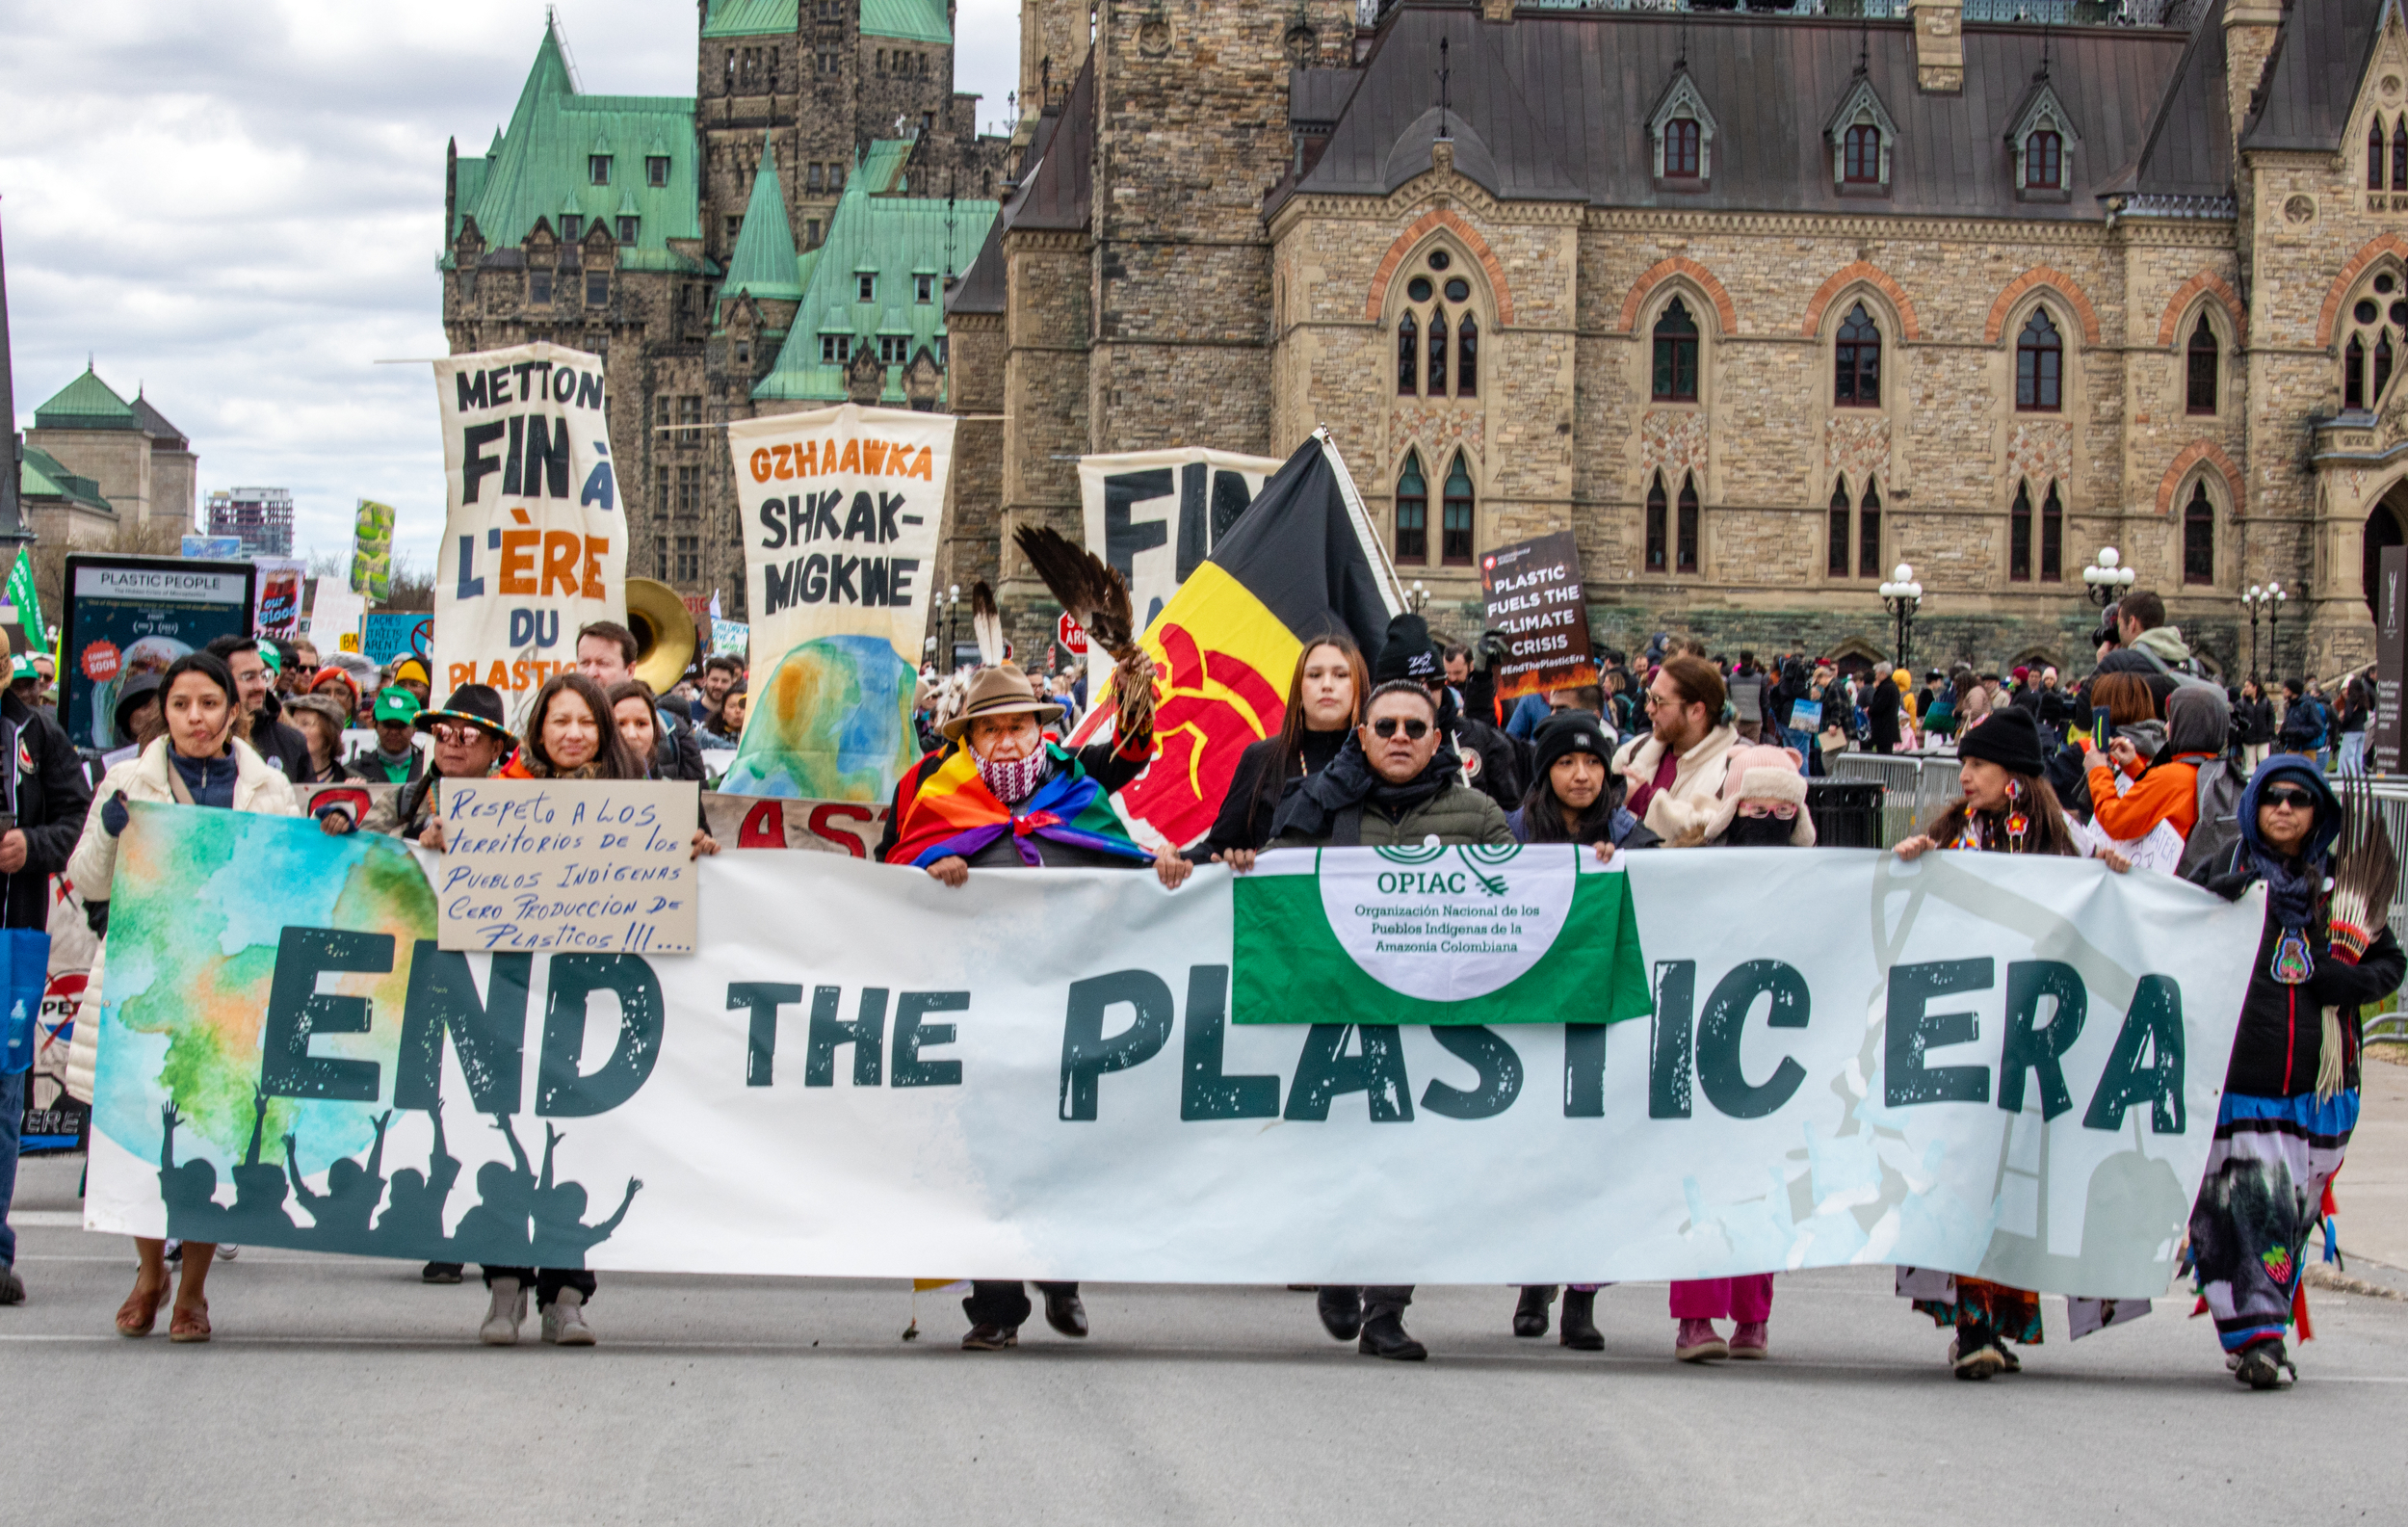 Protestors walk behind a banner that says 'End the plastic era'